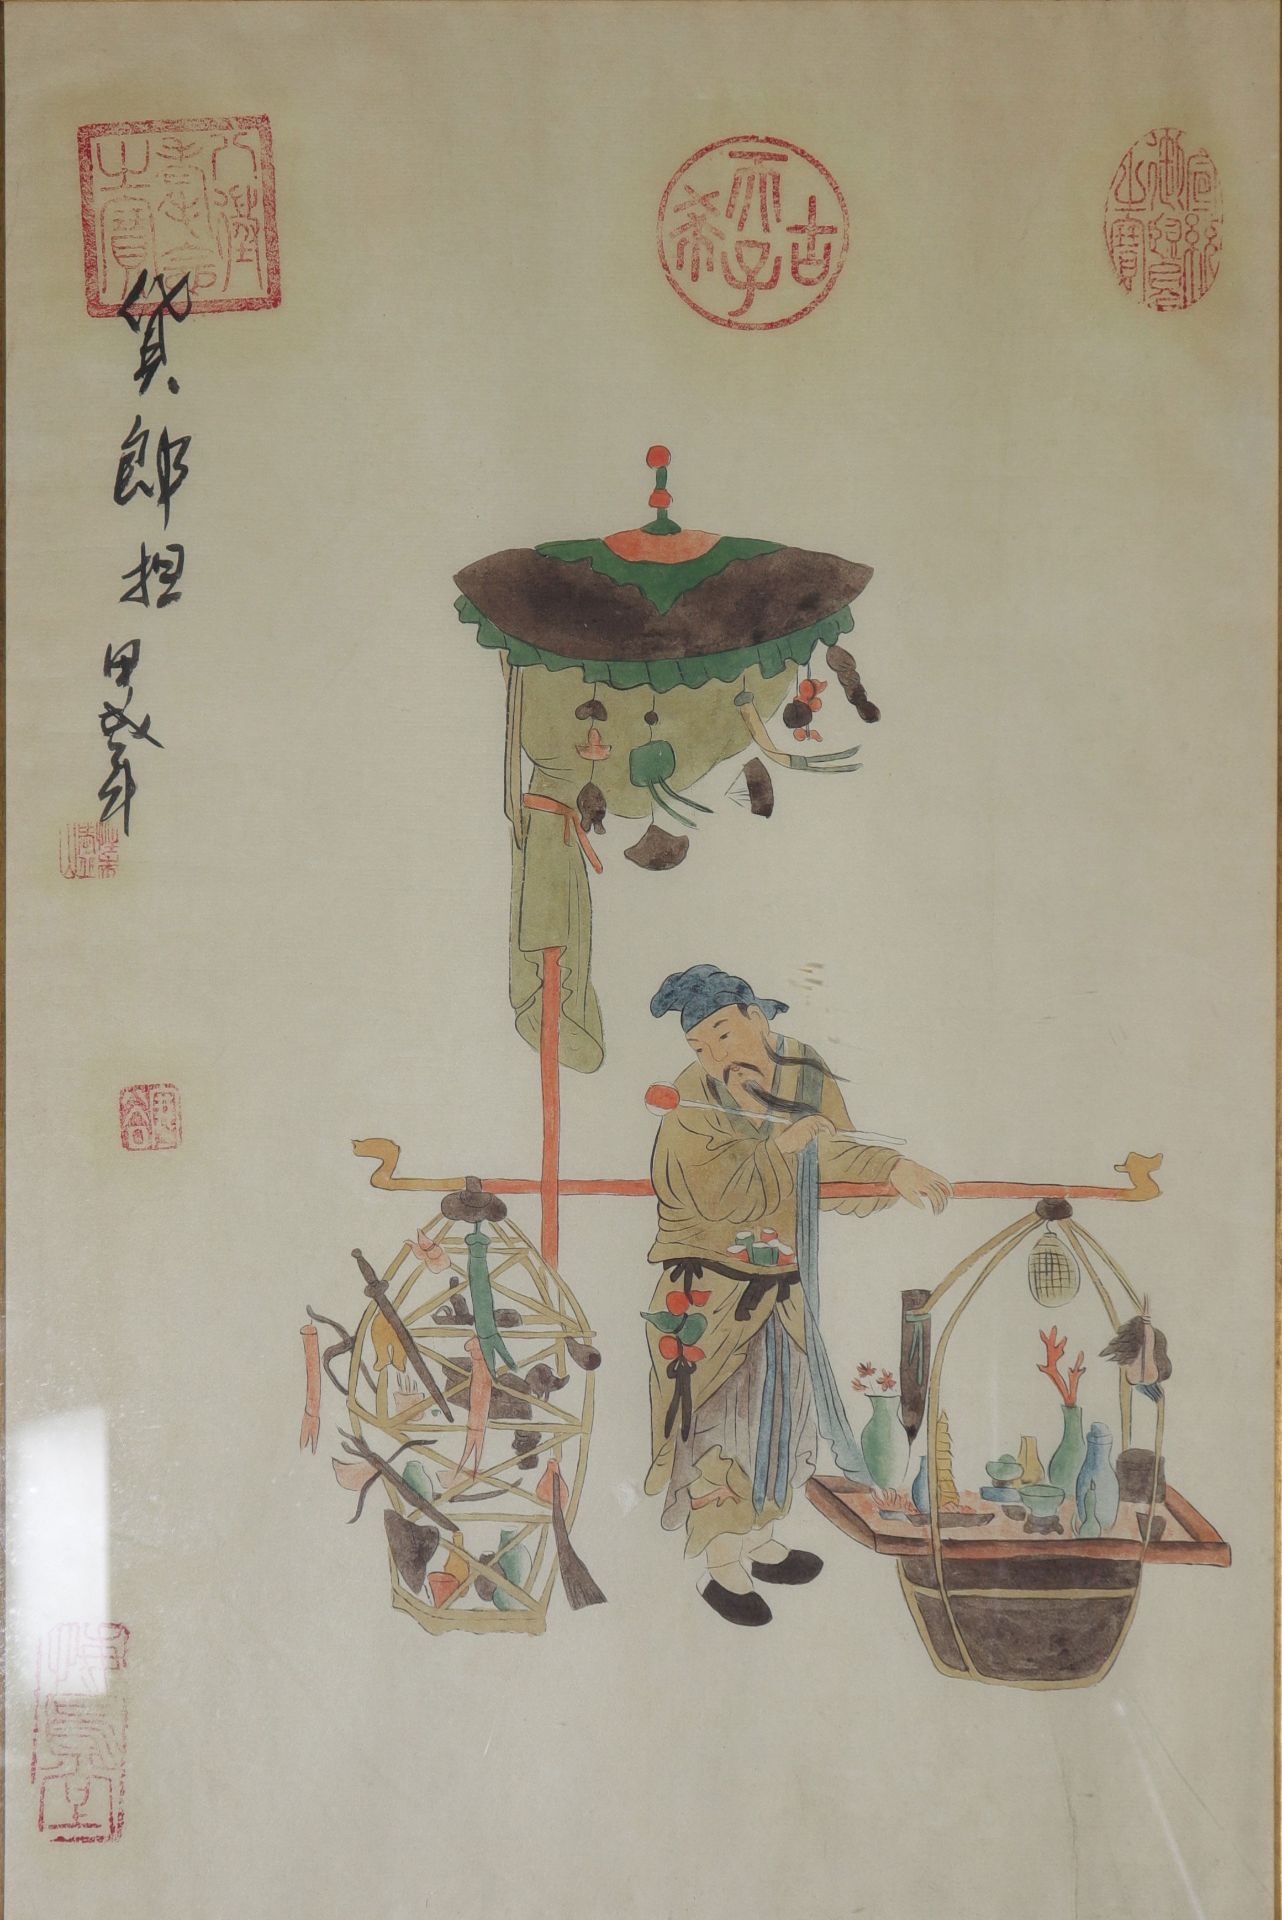 China drawing "the merchant"